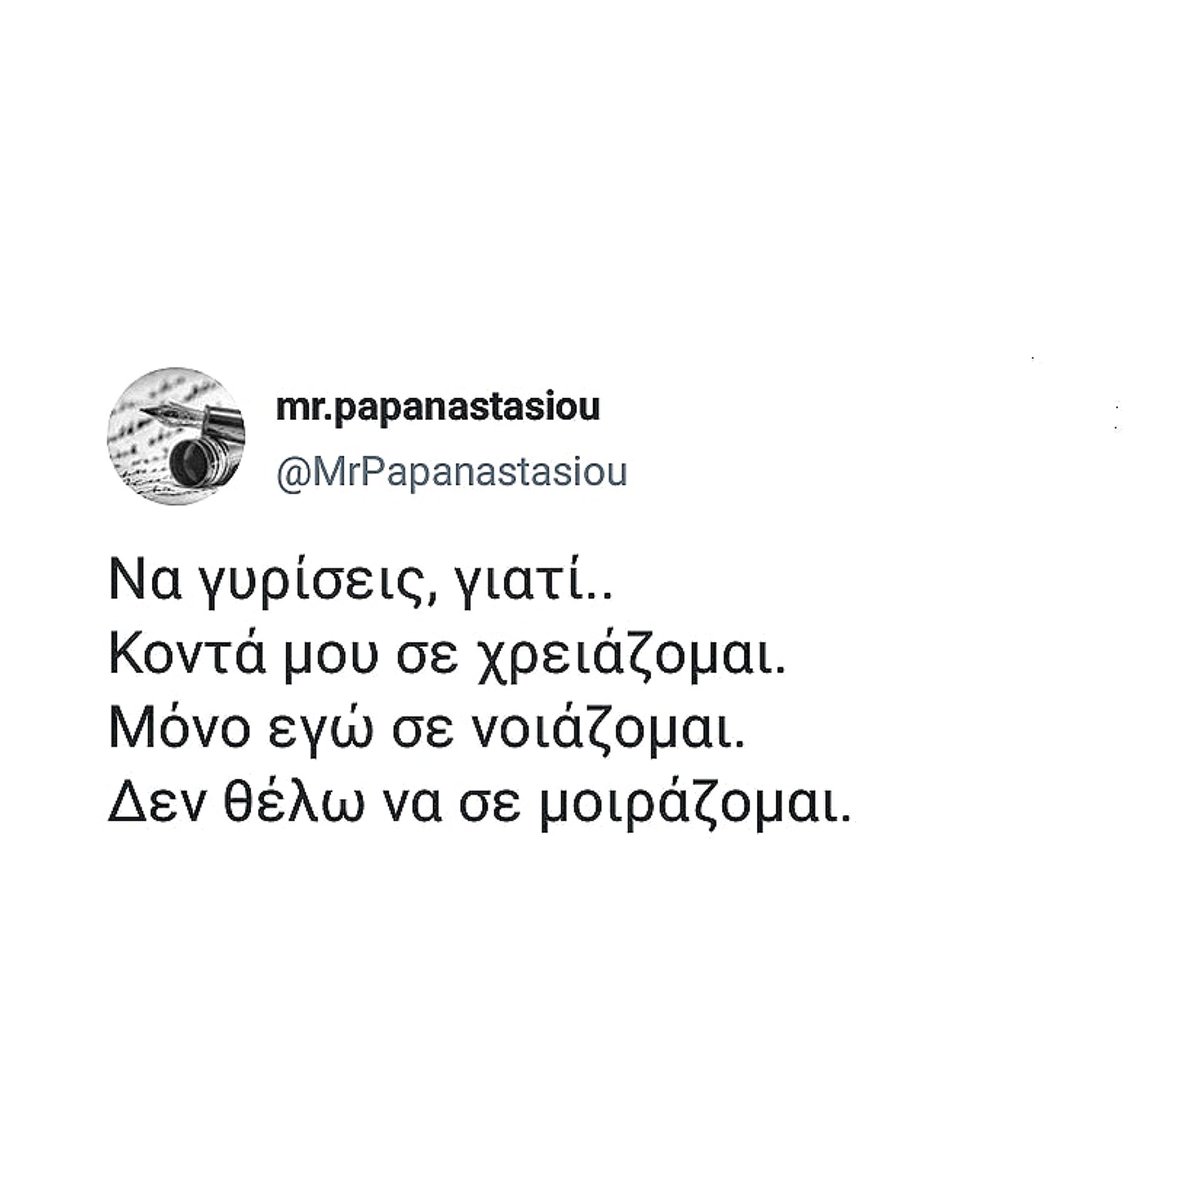 #inspiration #lovequotes #quotestoliveby #words #inspirationalquotes #greekquotes #quotes #love #quoteoftheday #wordswithmeaning #mrpapanastasiou